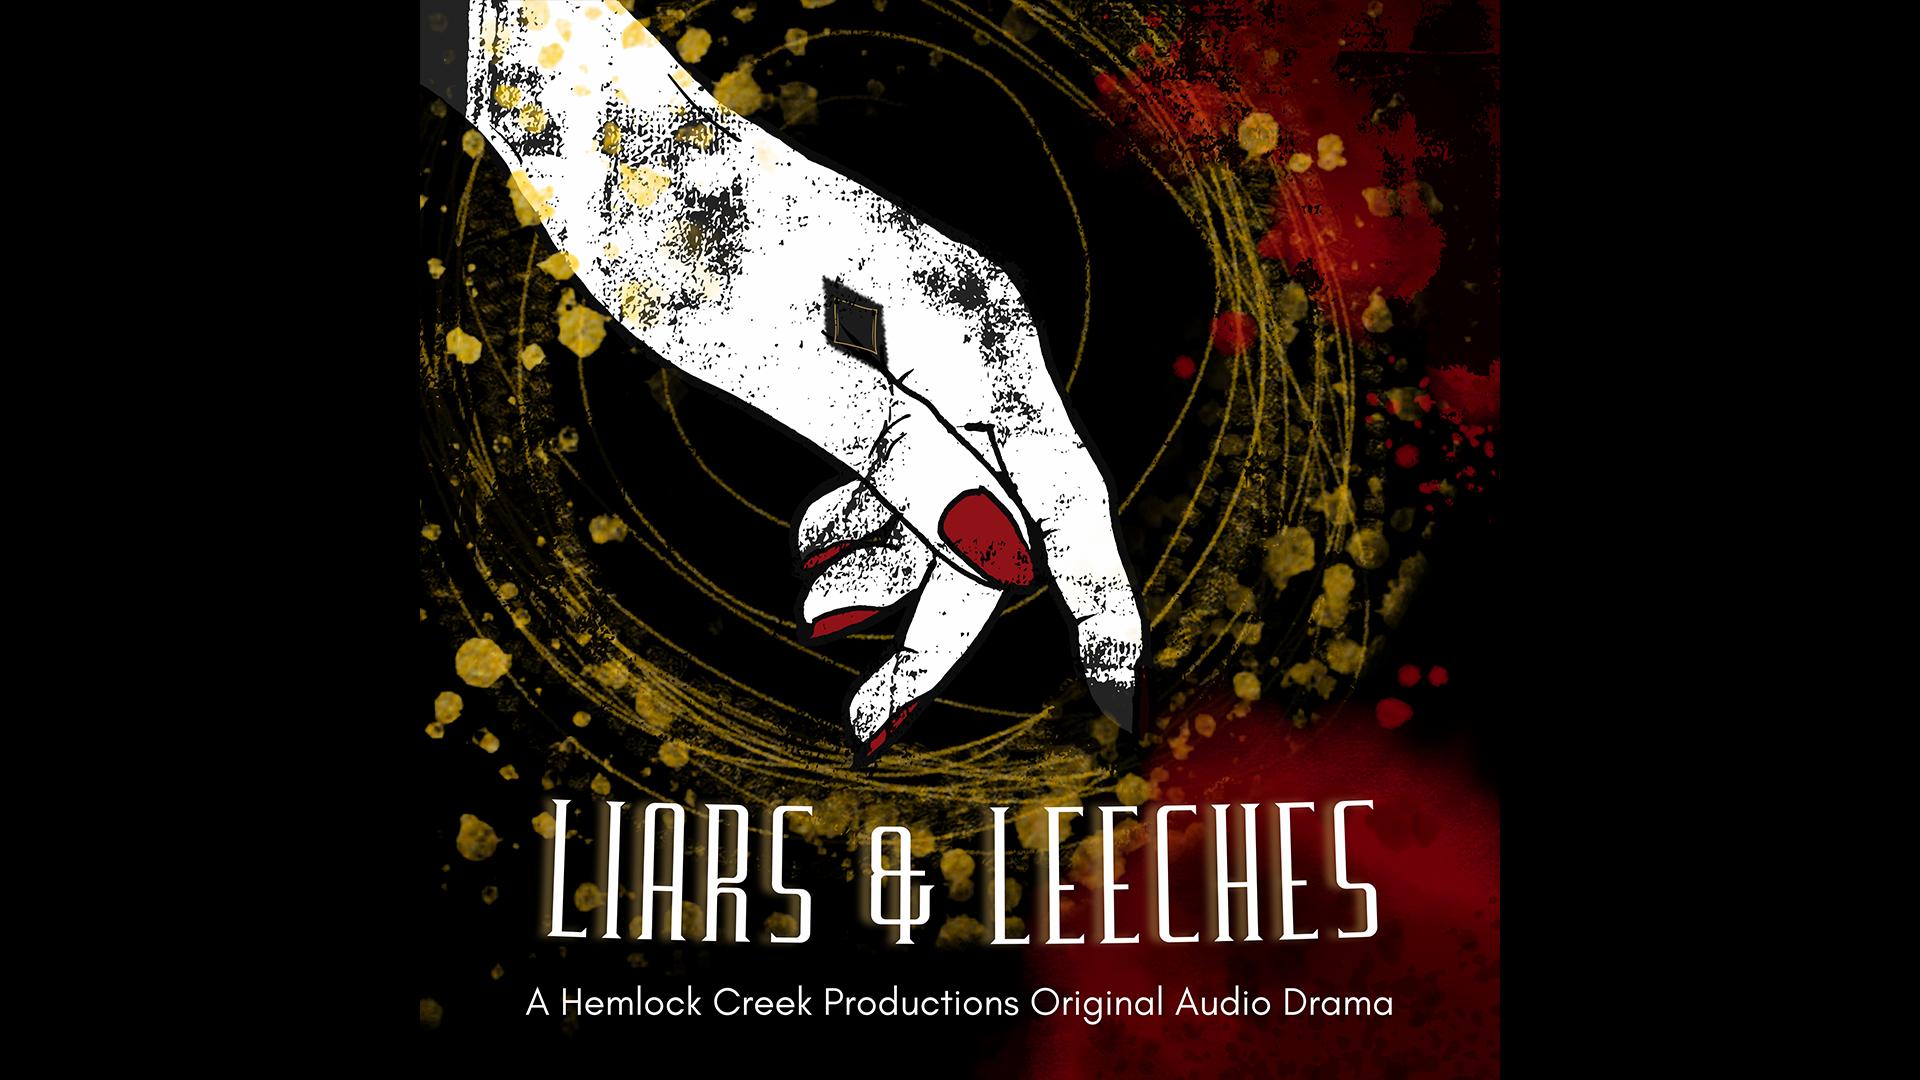 Liars & Leeches